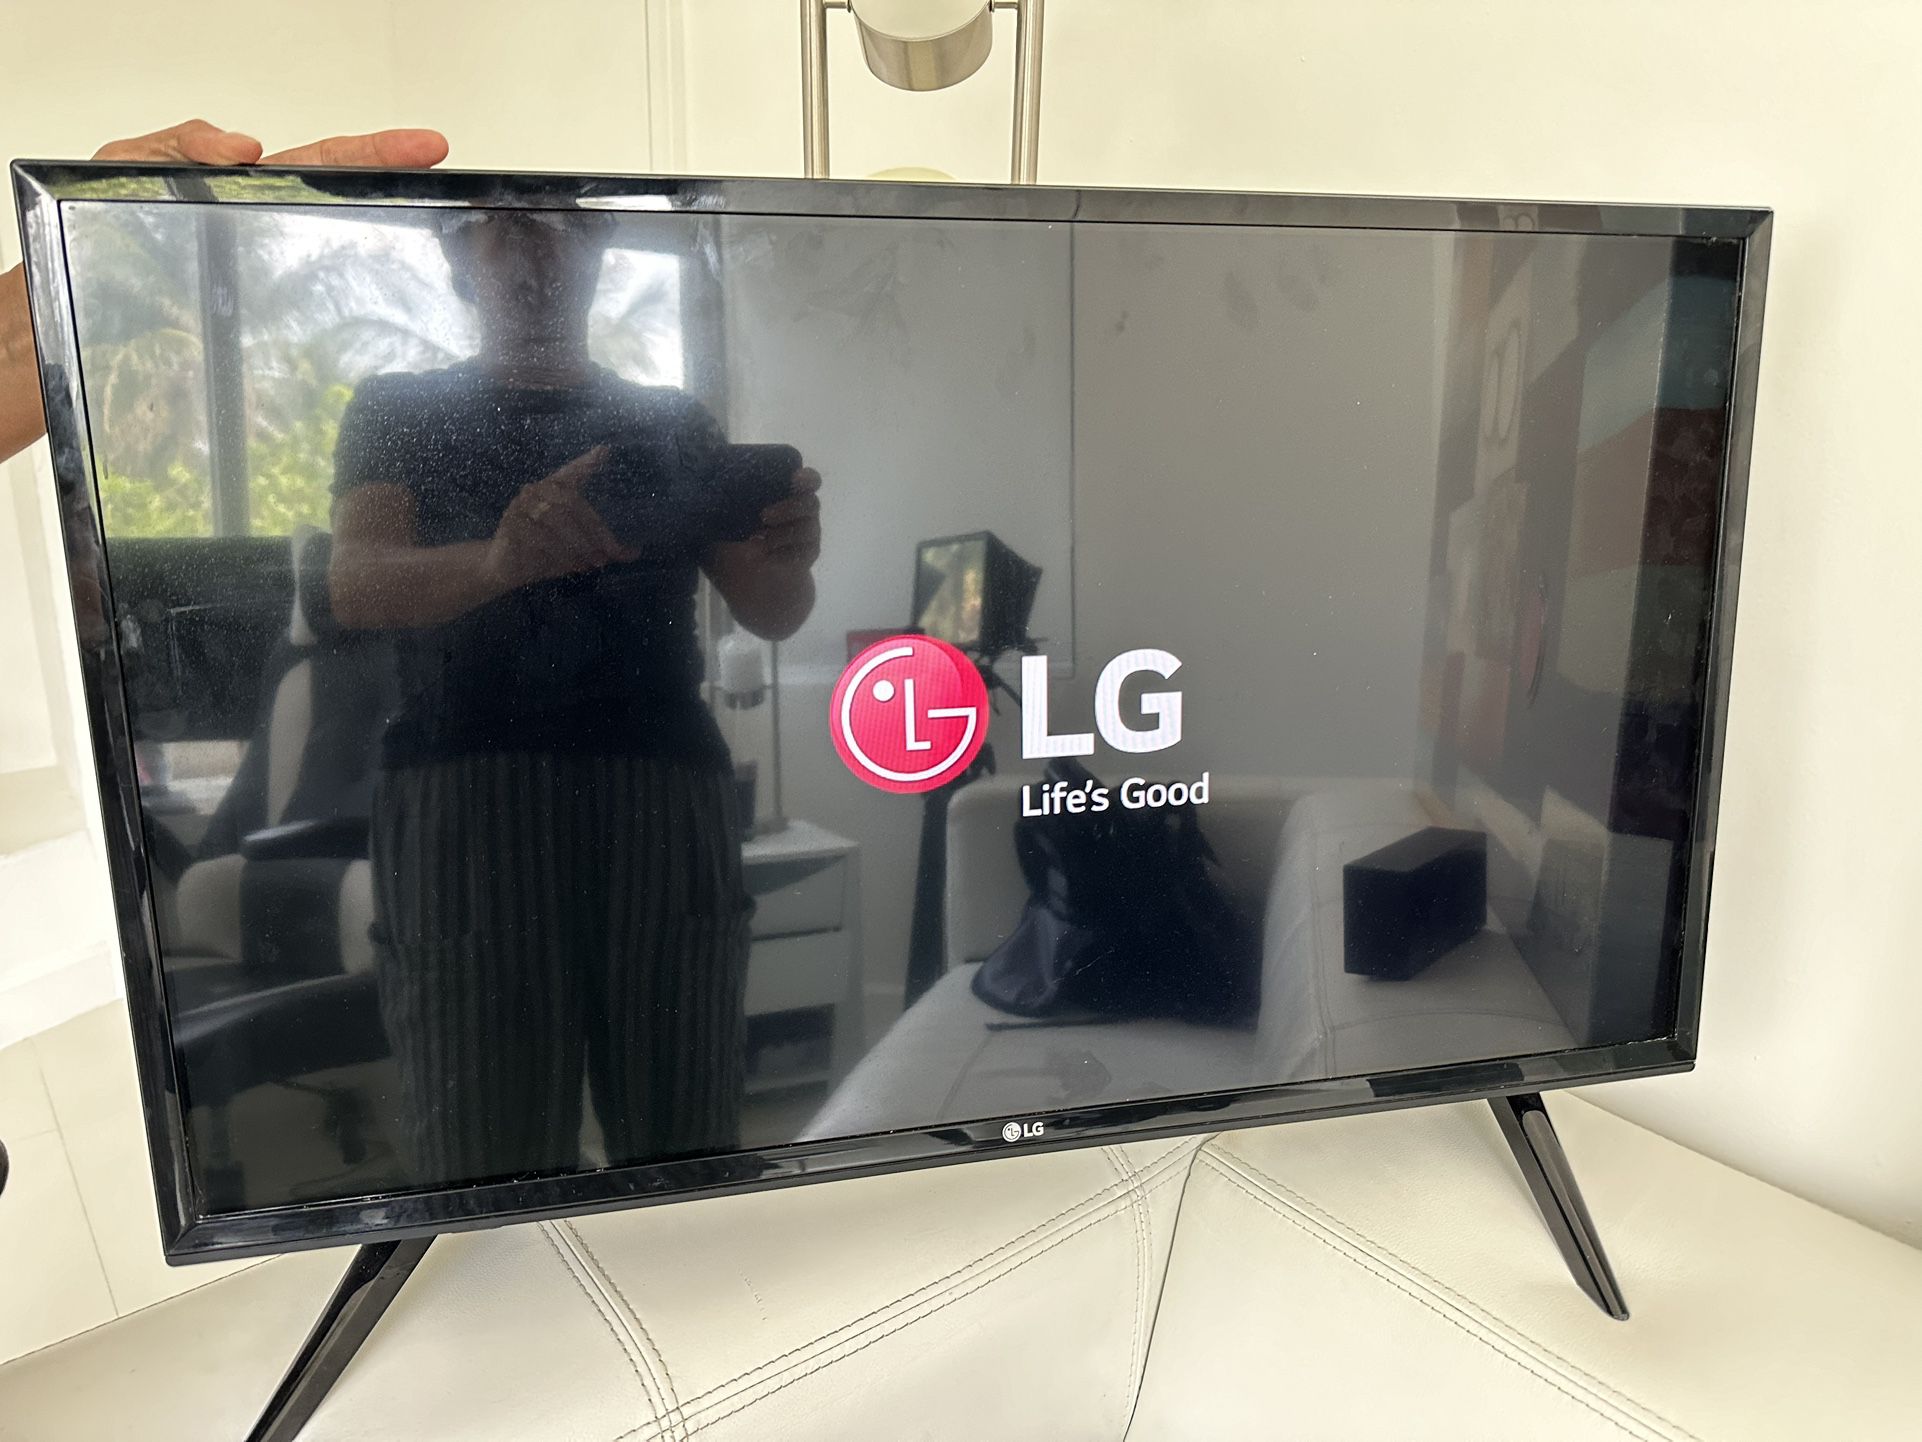 TV LG 32 inch’s